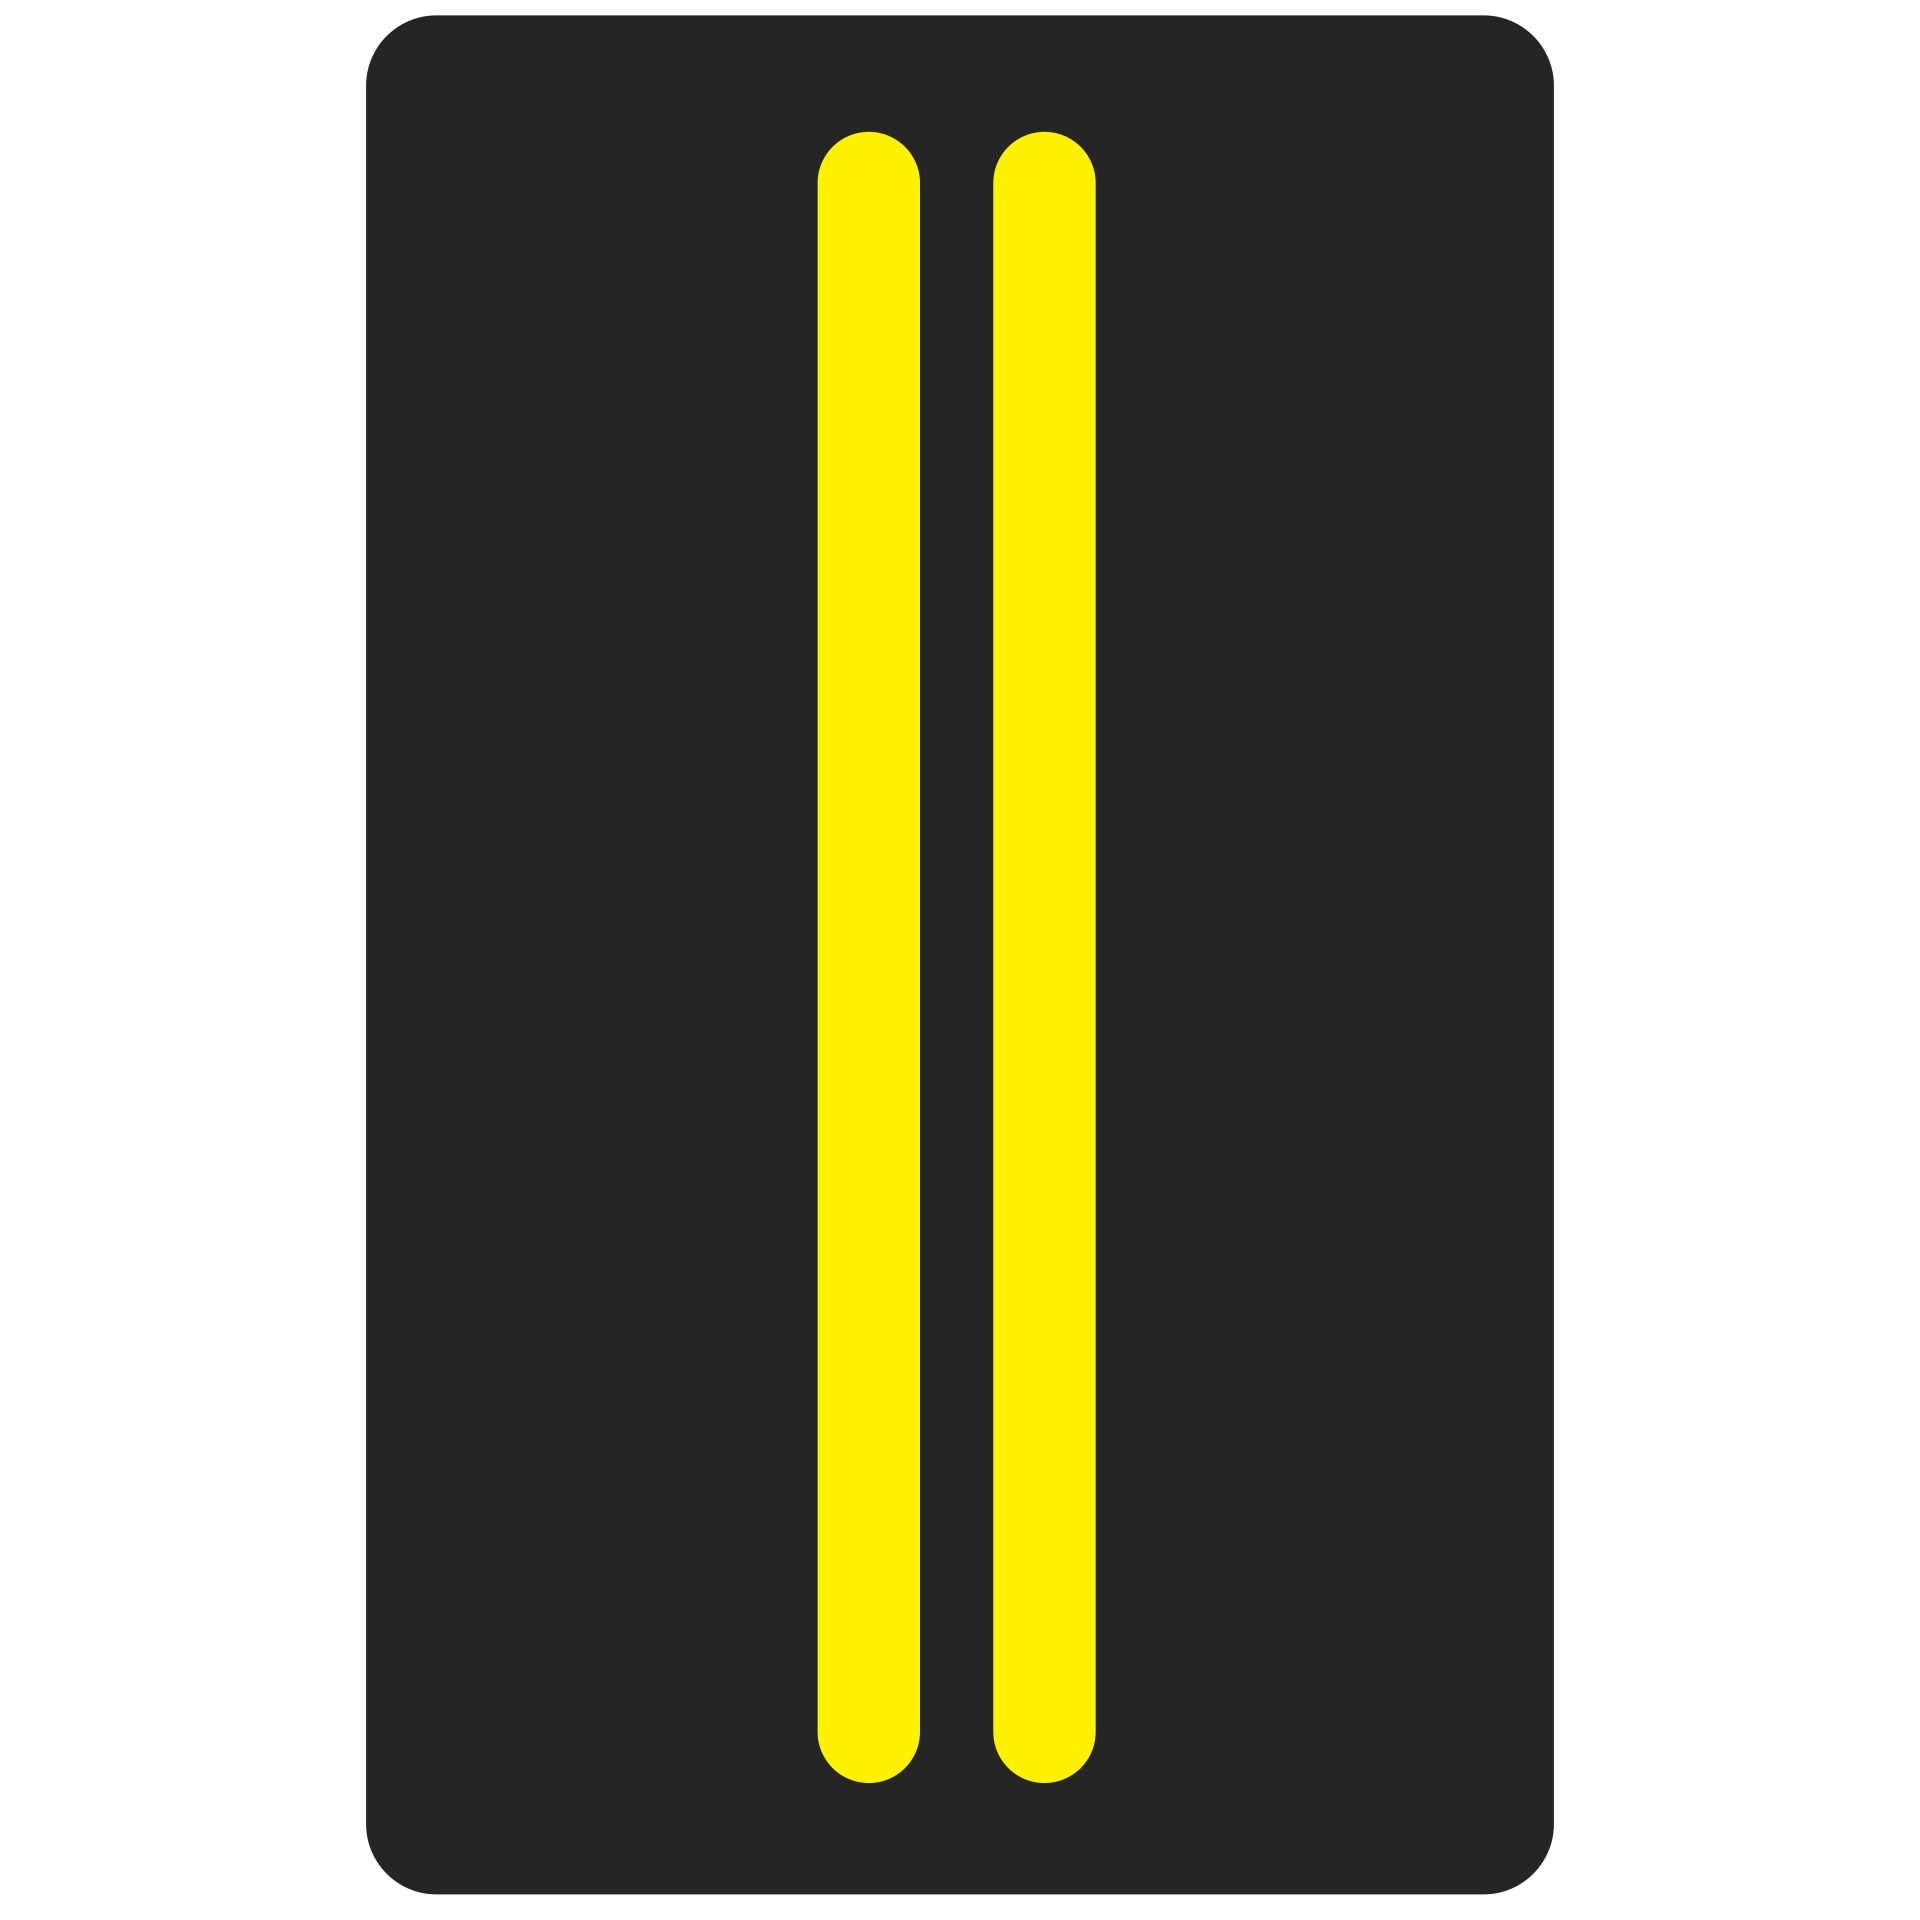 Double Yellow Line Road